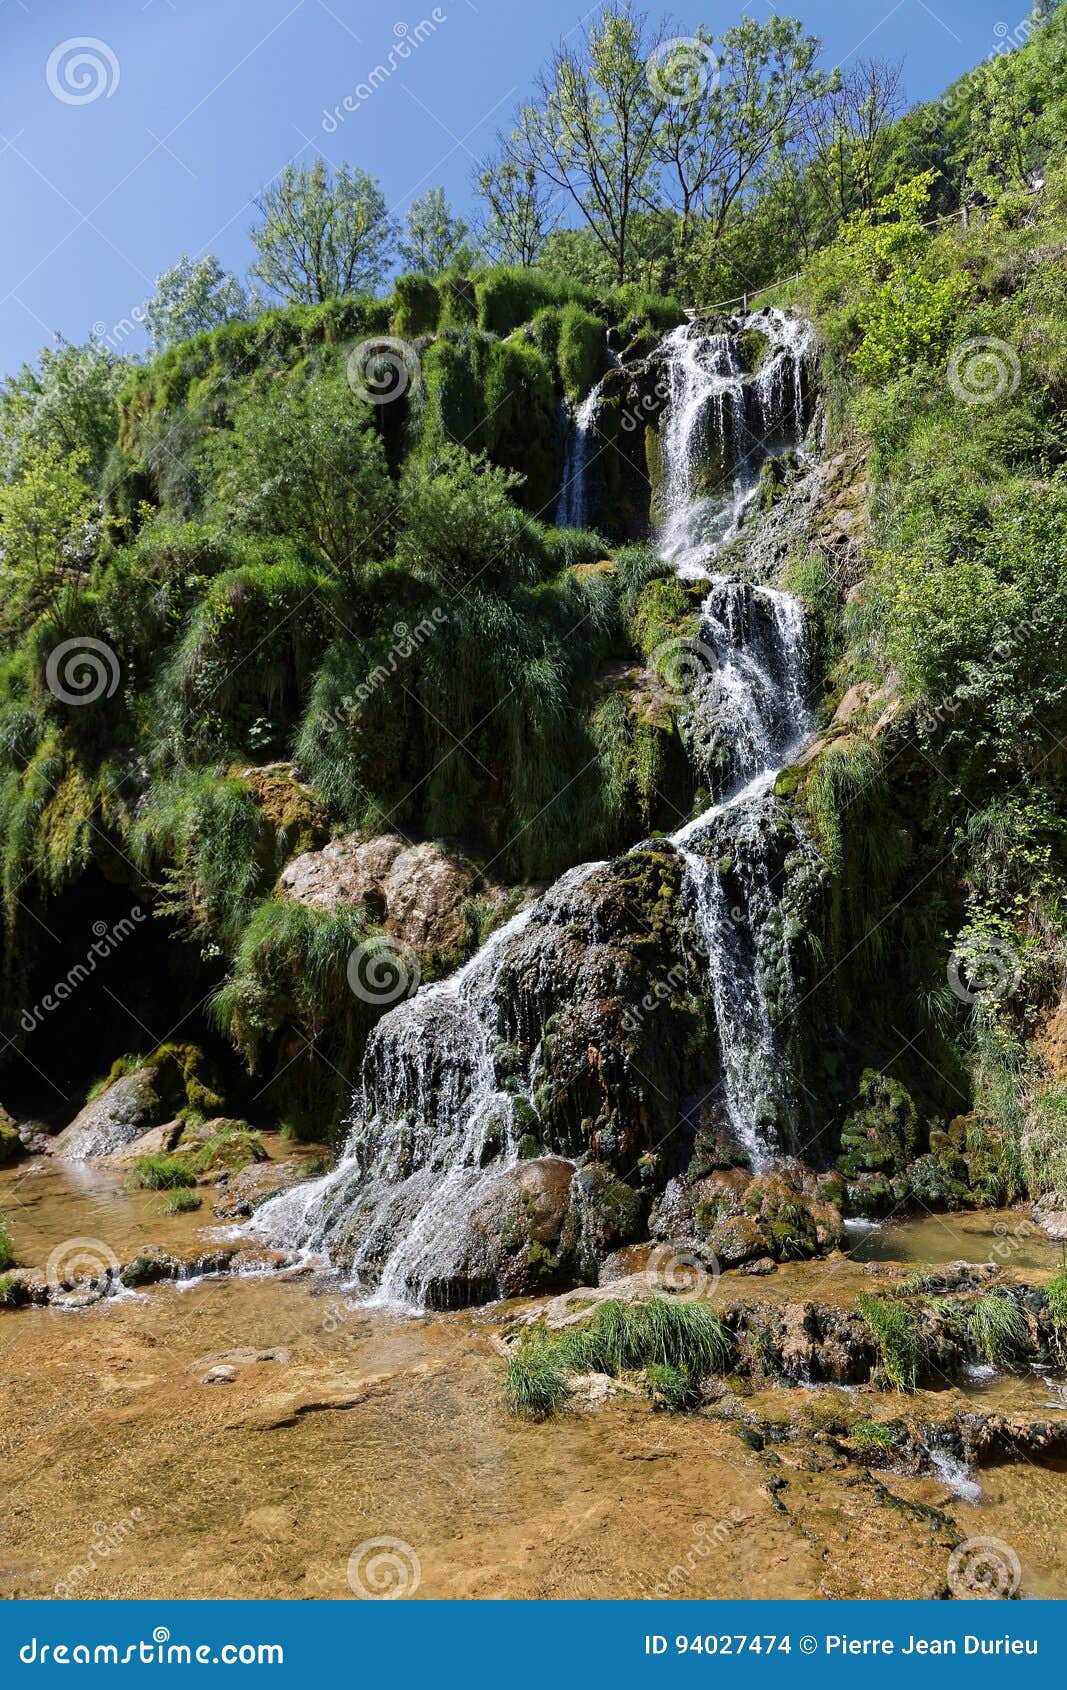 Waterfalls in Baume-Les-Messieurs. Waterfalls in the Baume-Les-Messieurs valley